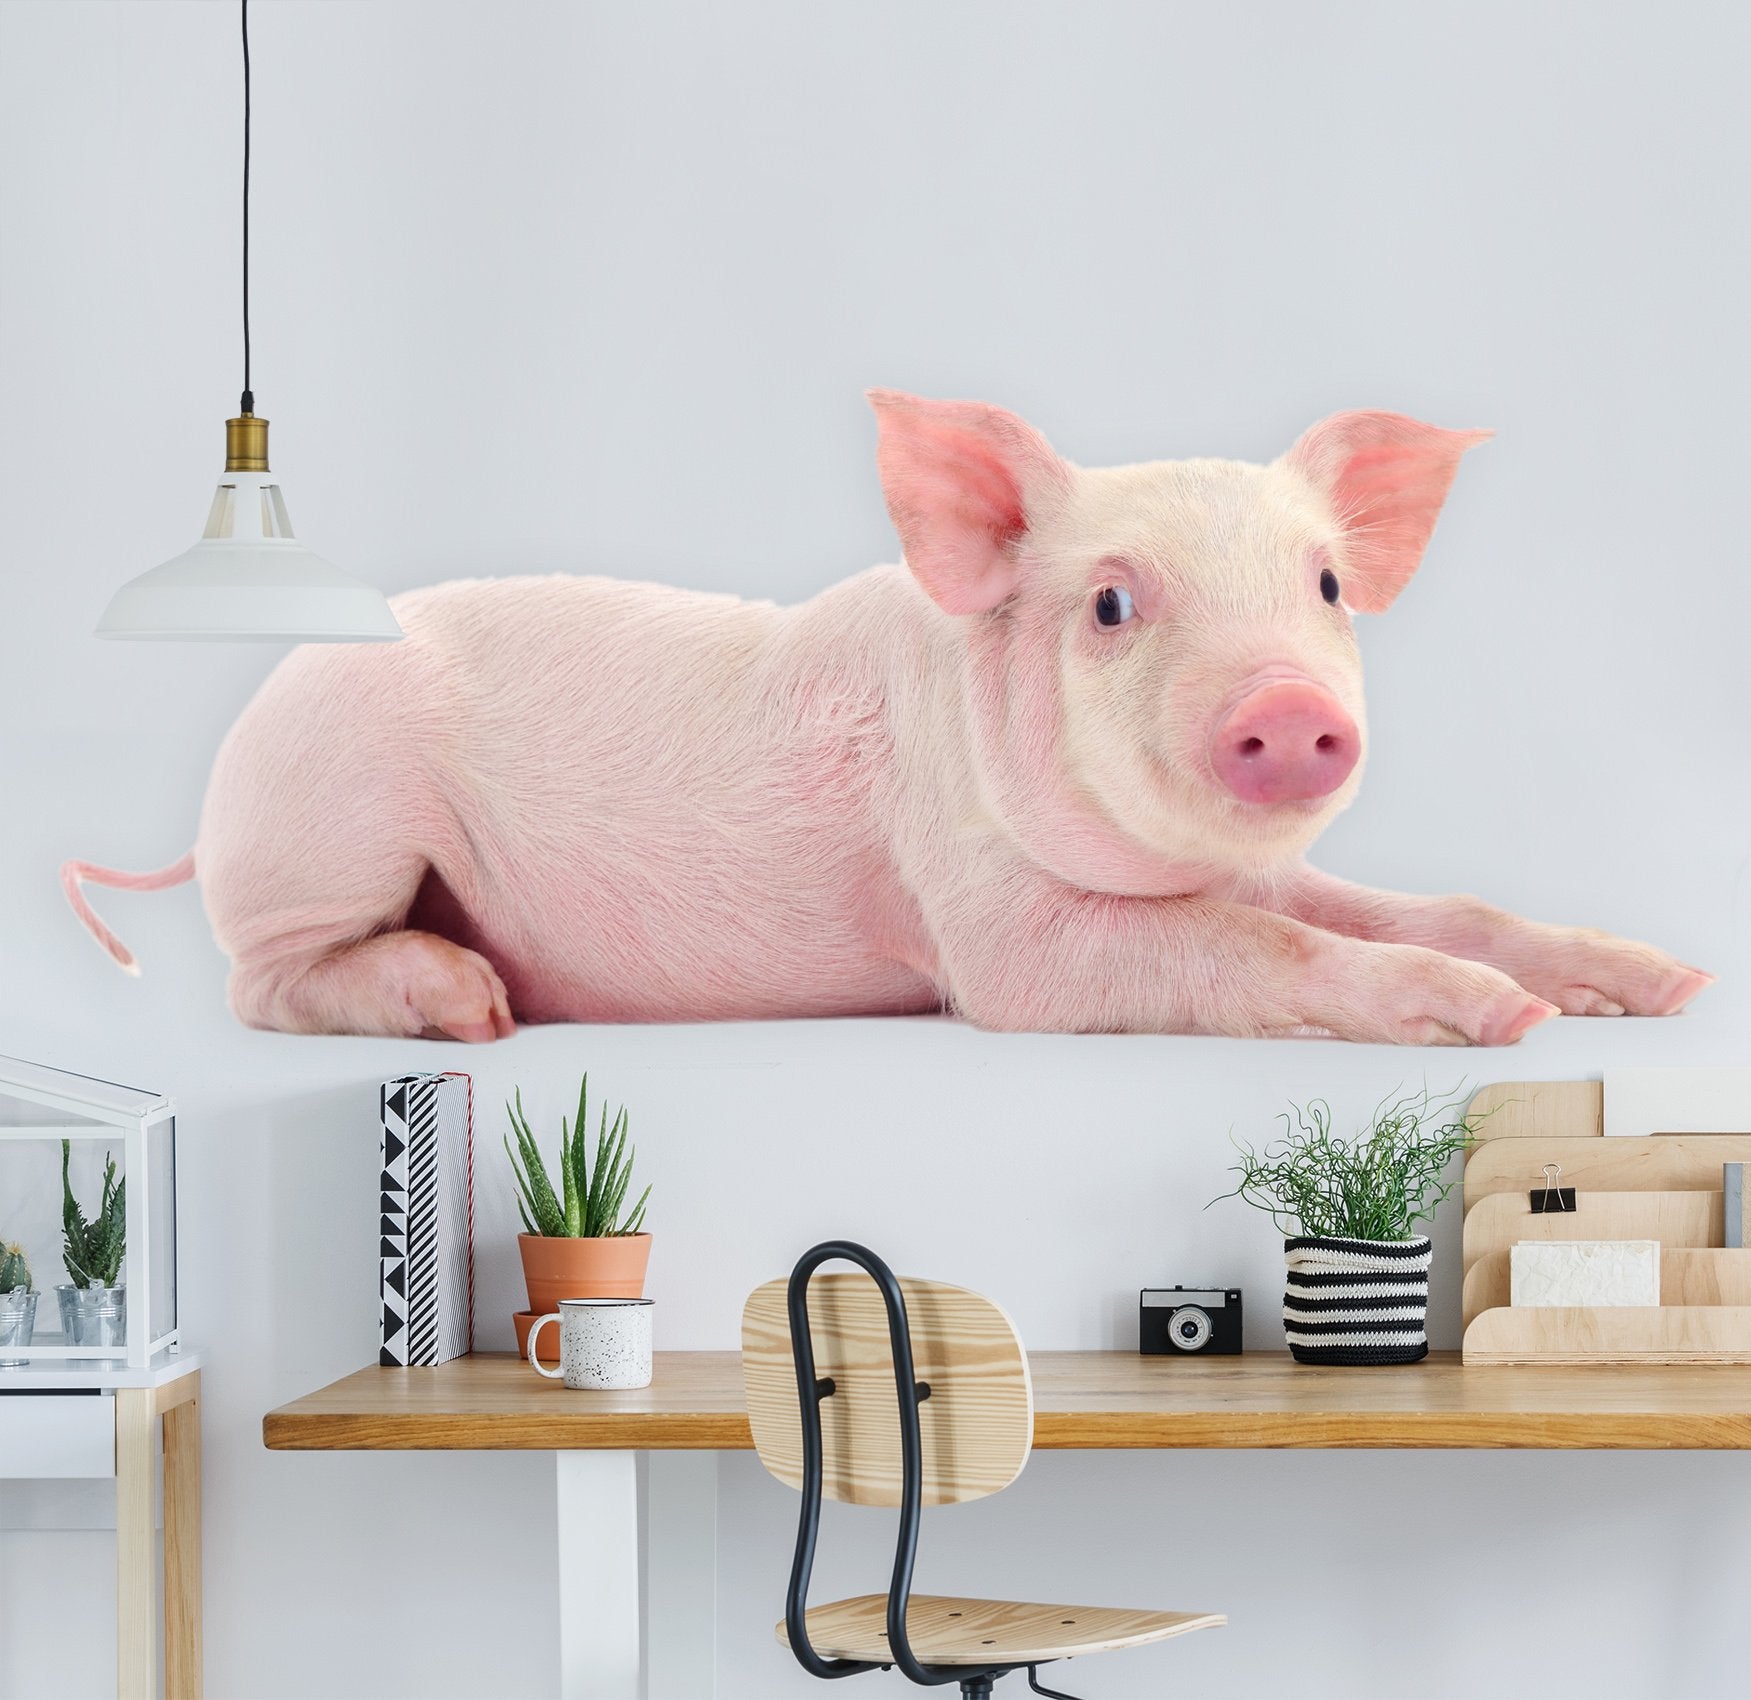 3D Lying Pig 140 Animals Wall Stickers Wallpaper AJ Wallpaper 